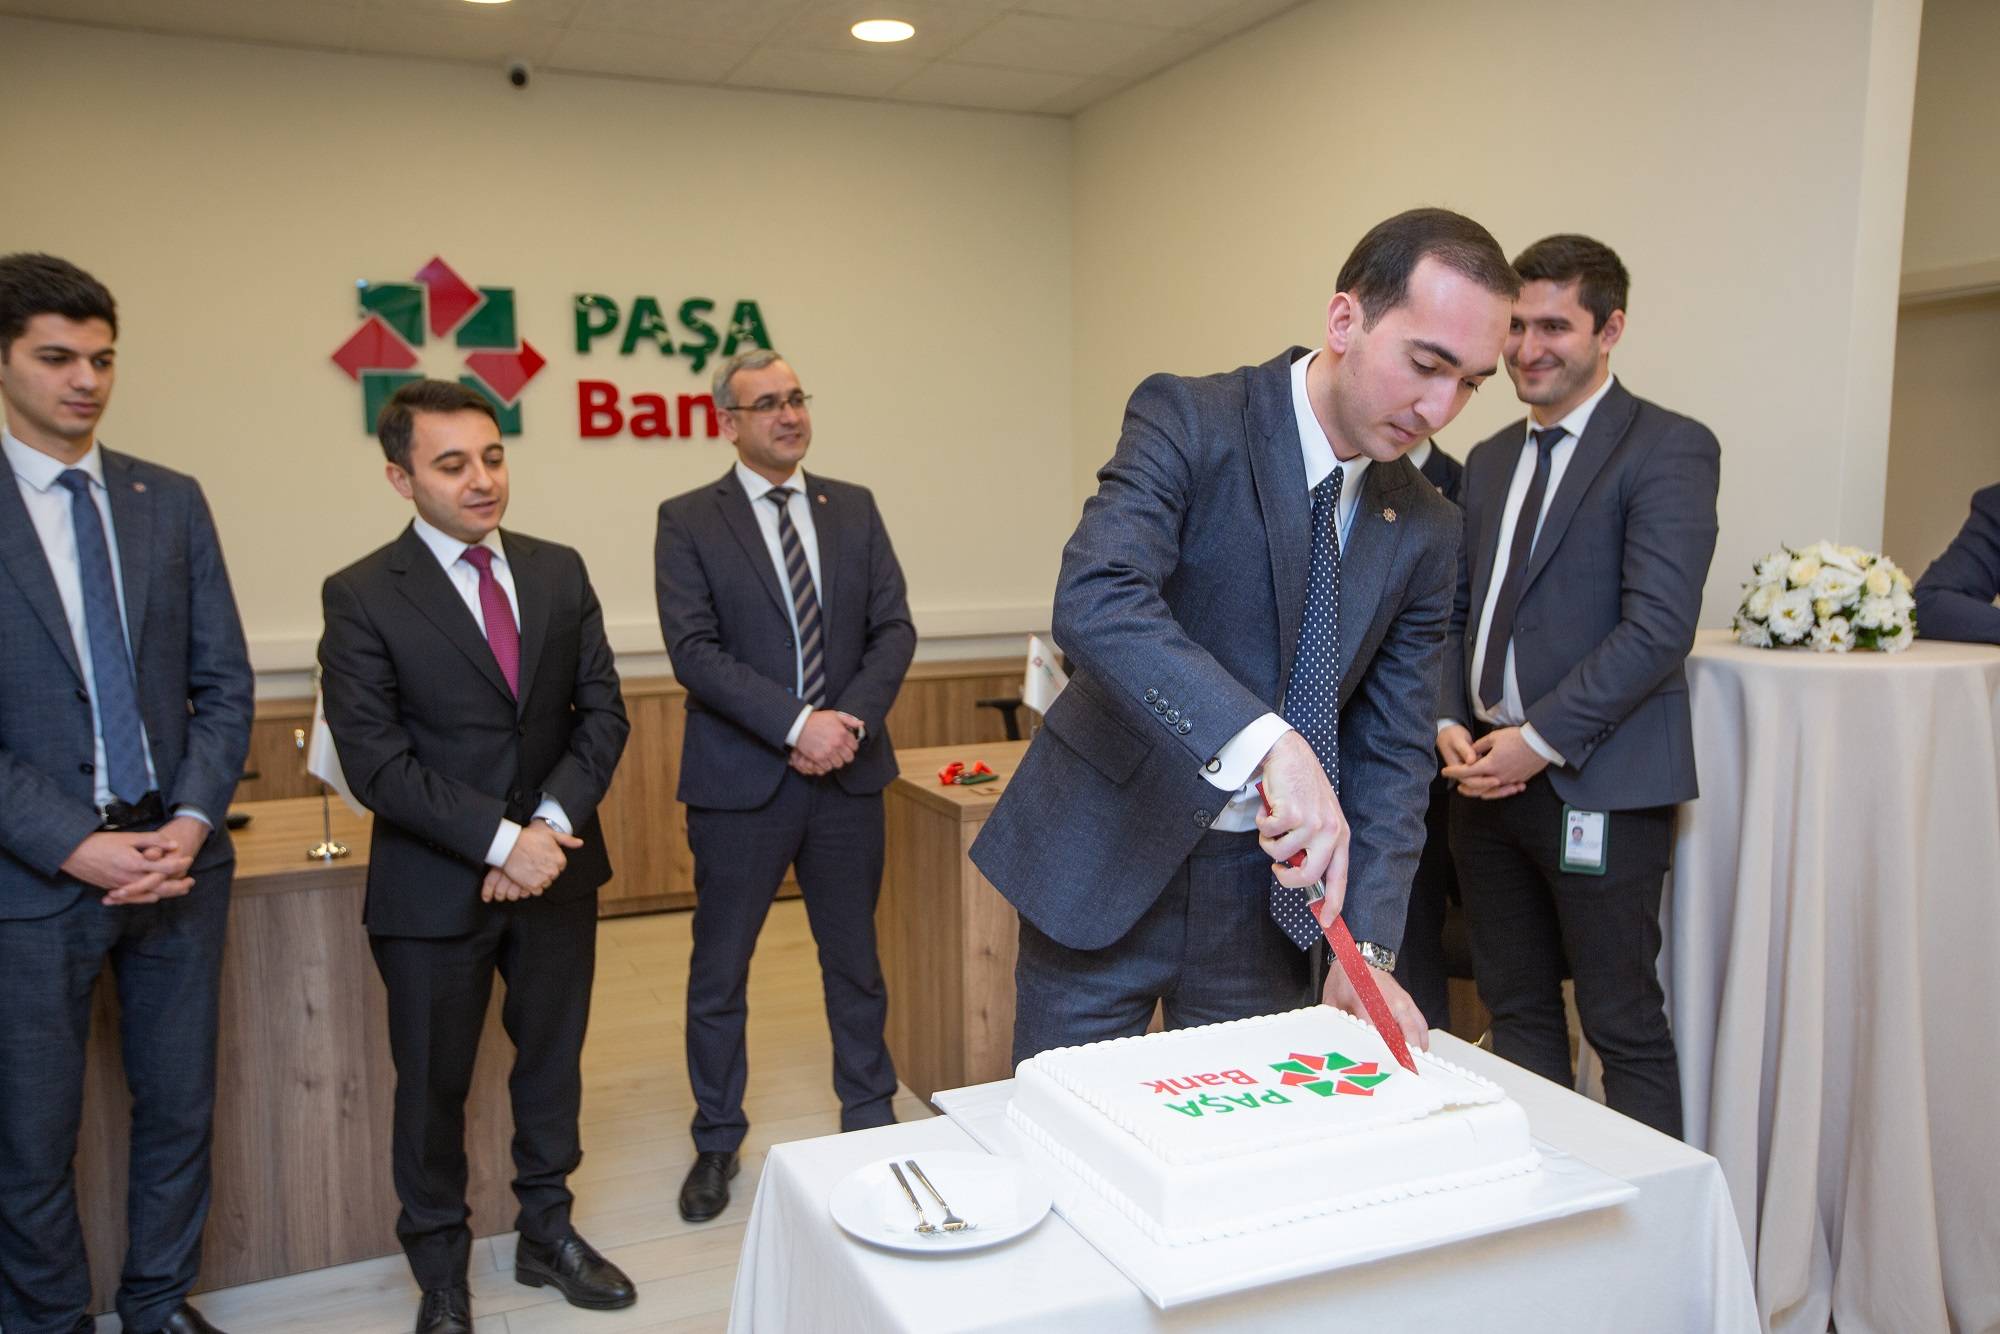 Pasha bank